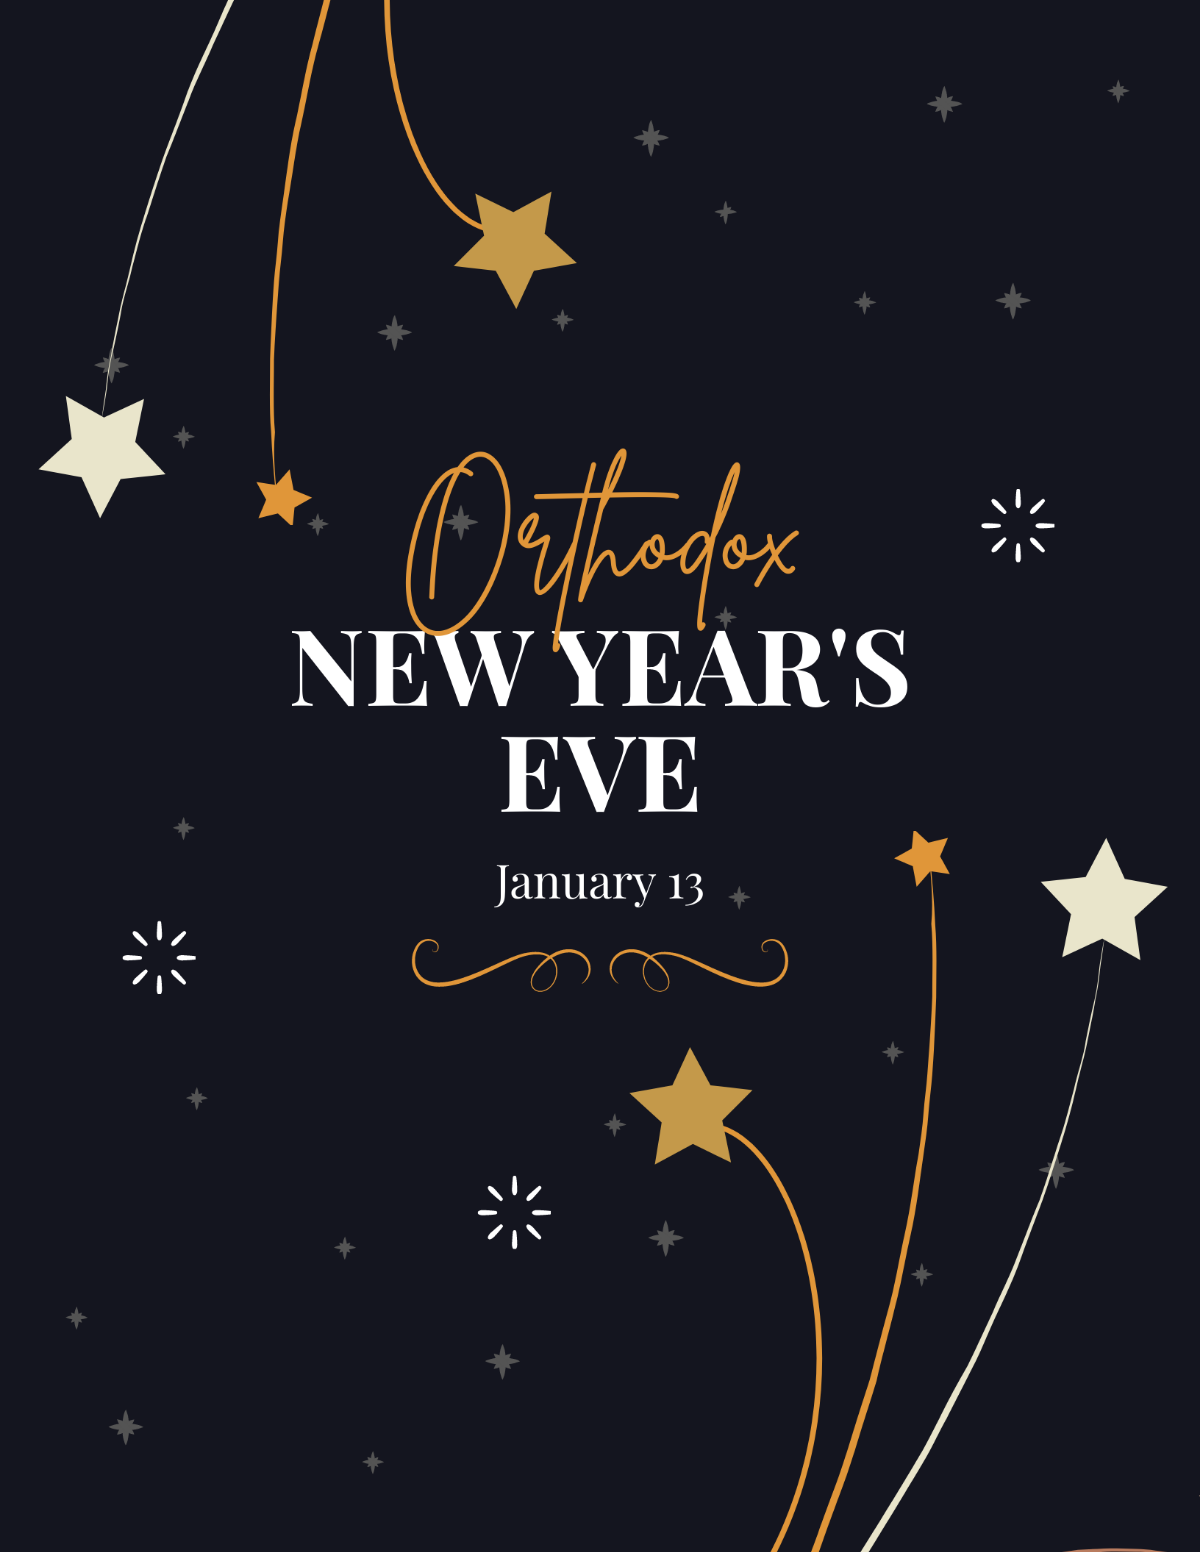 Orthodox New Year Eve Flyer